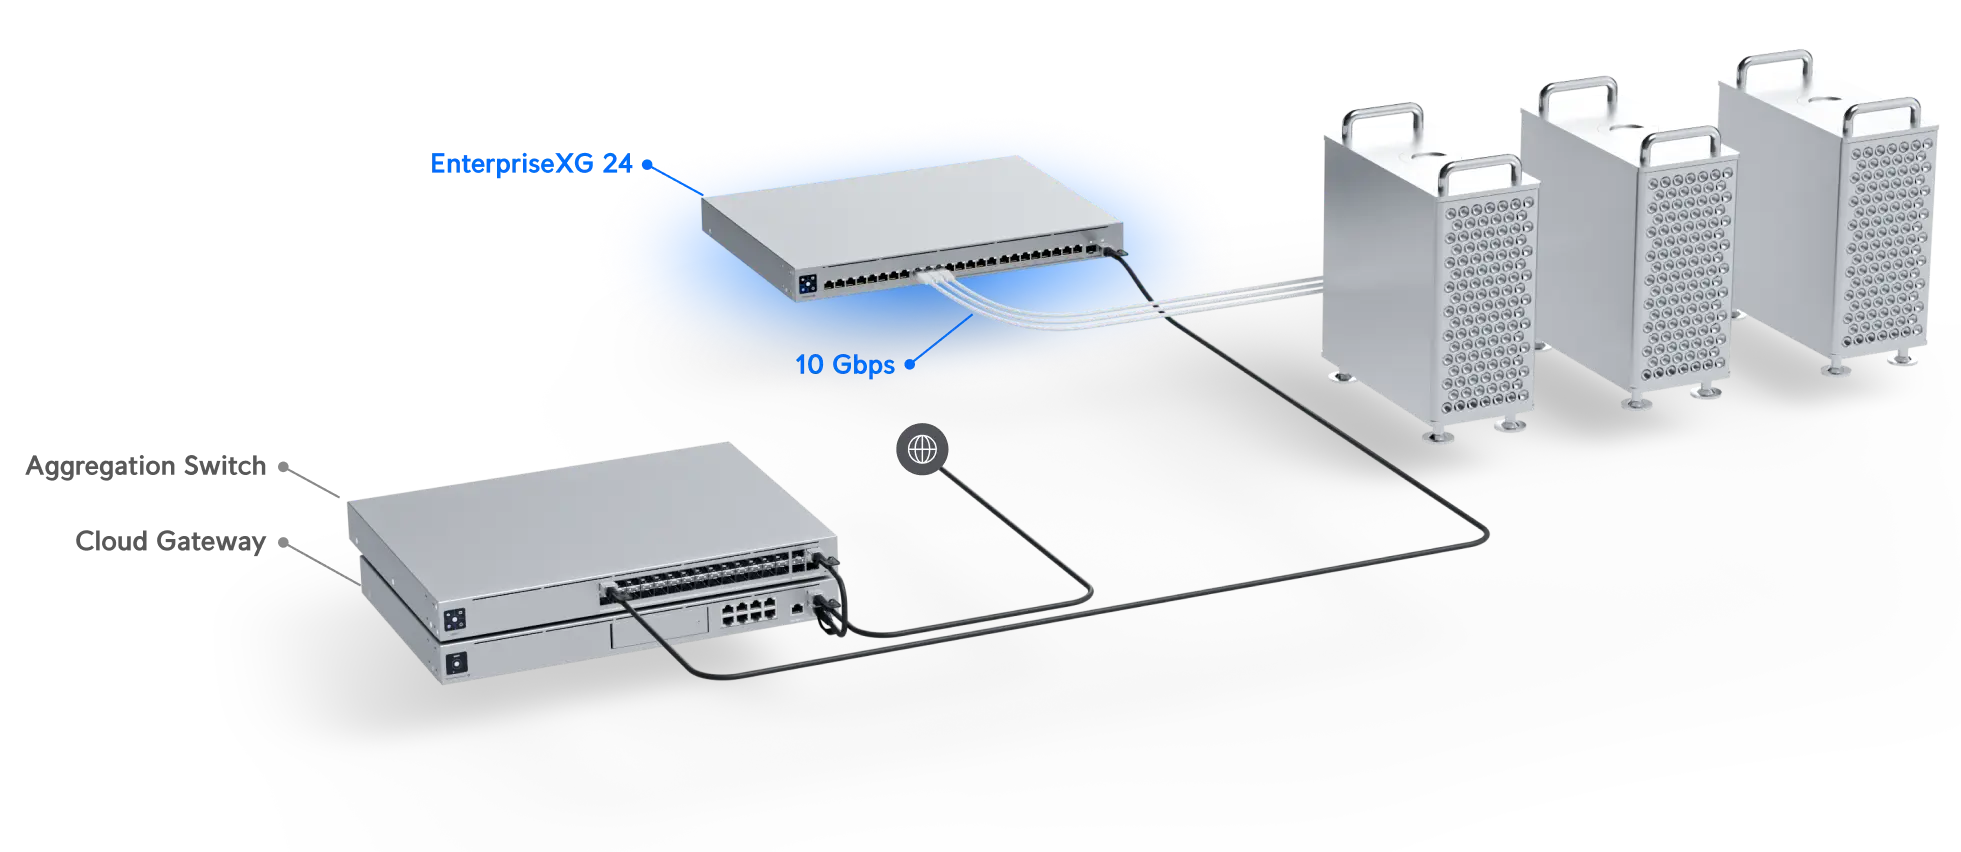 Ubiquiti Networks Switch Enterprise XG 24 24-Port 10G Managed Network Switch with 25G SFP28